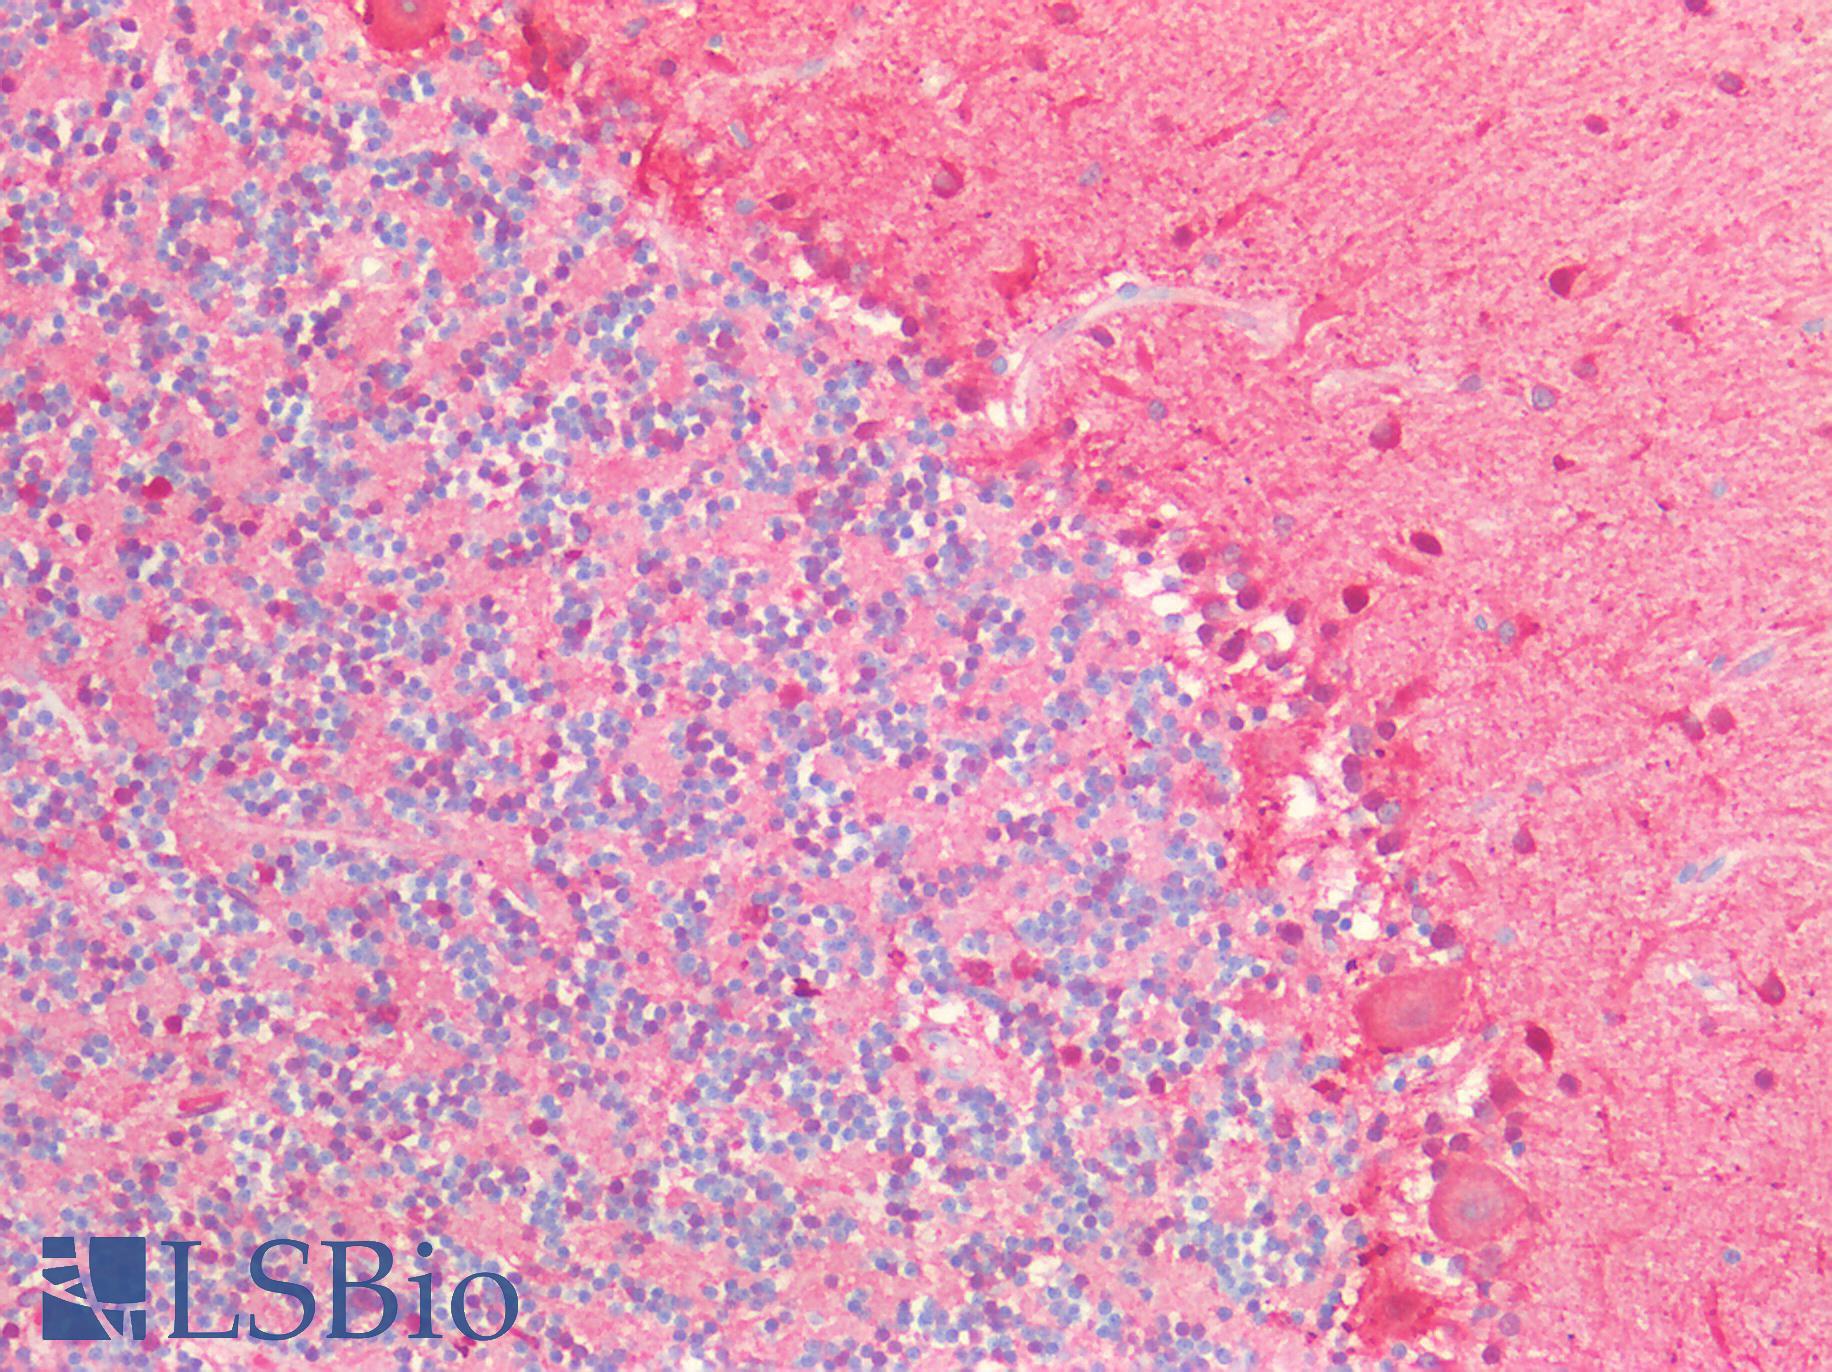 PVALB / Parvalbumin Antibody - Human Brain, Cerebellum: Formalin-Fixed, Paraffin-Embedded (FFPE)